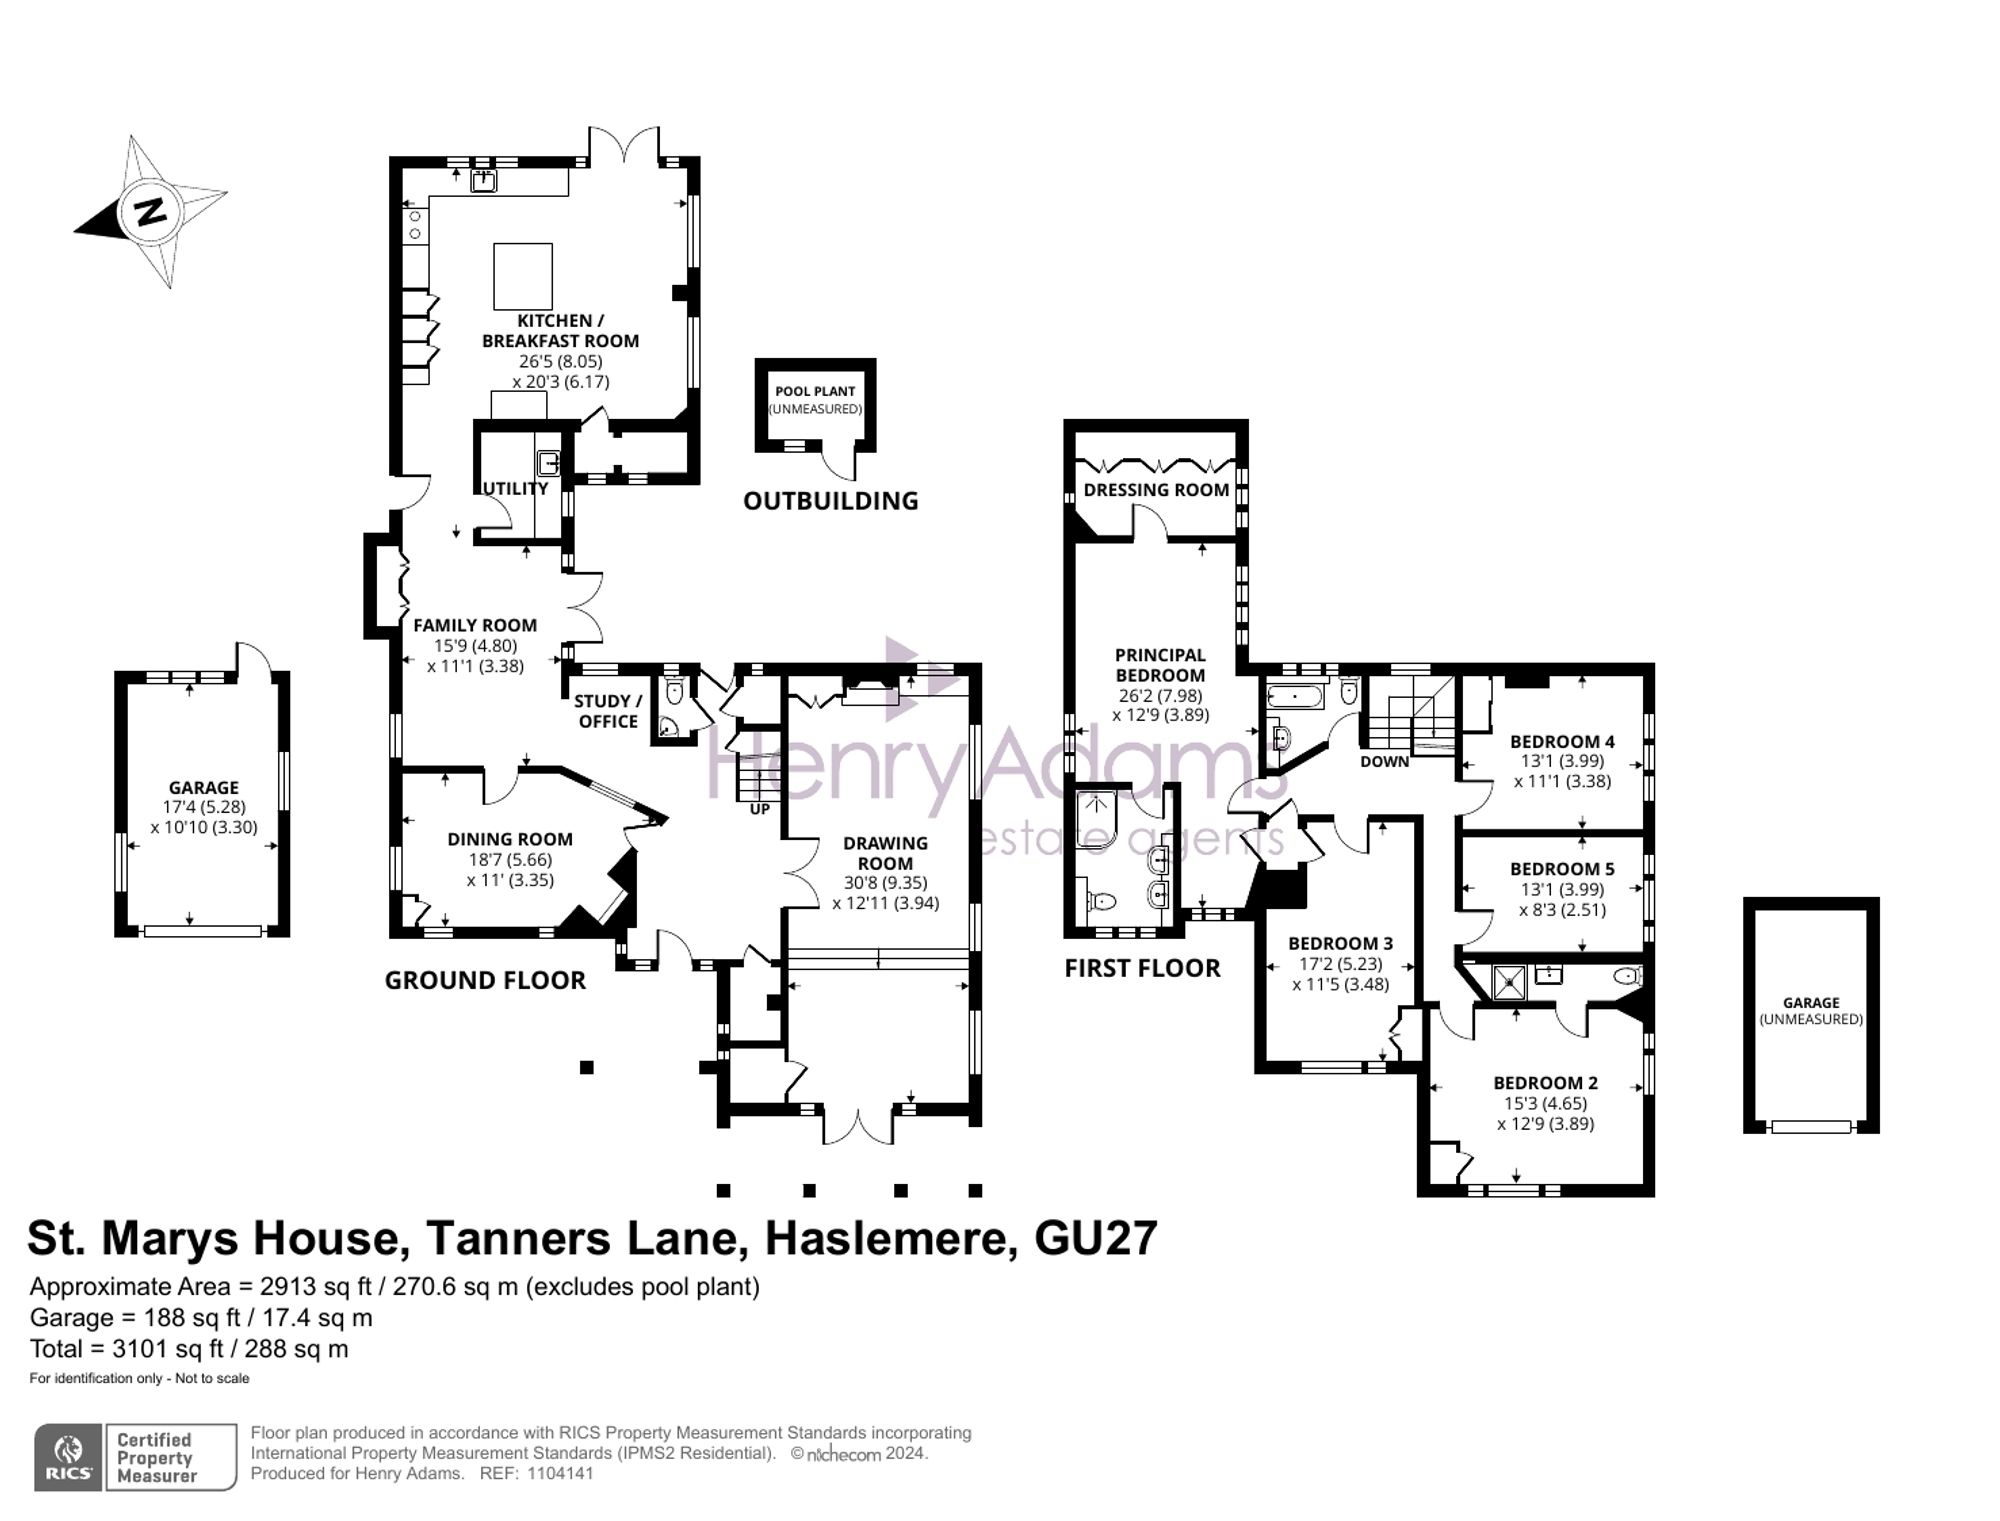 Tanners Lane, Haslemere, GU27 floorplans